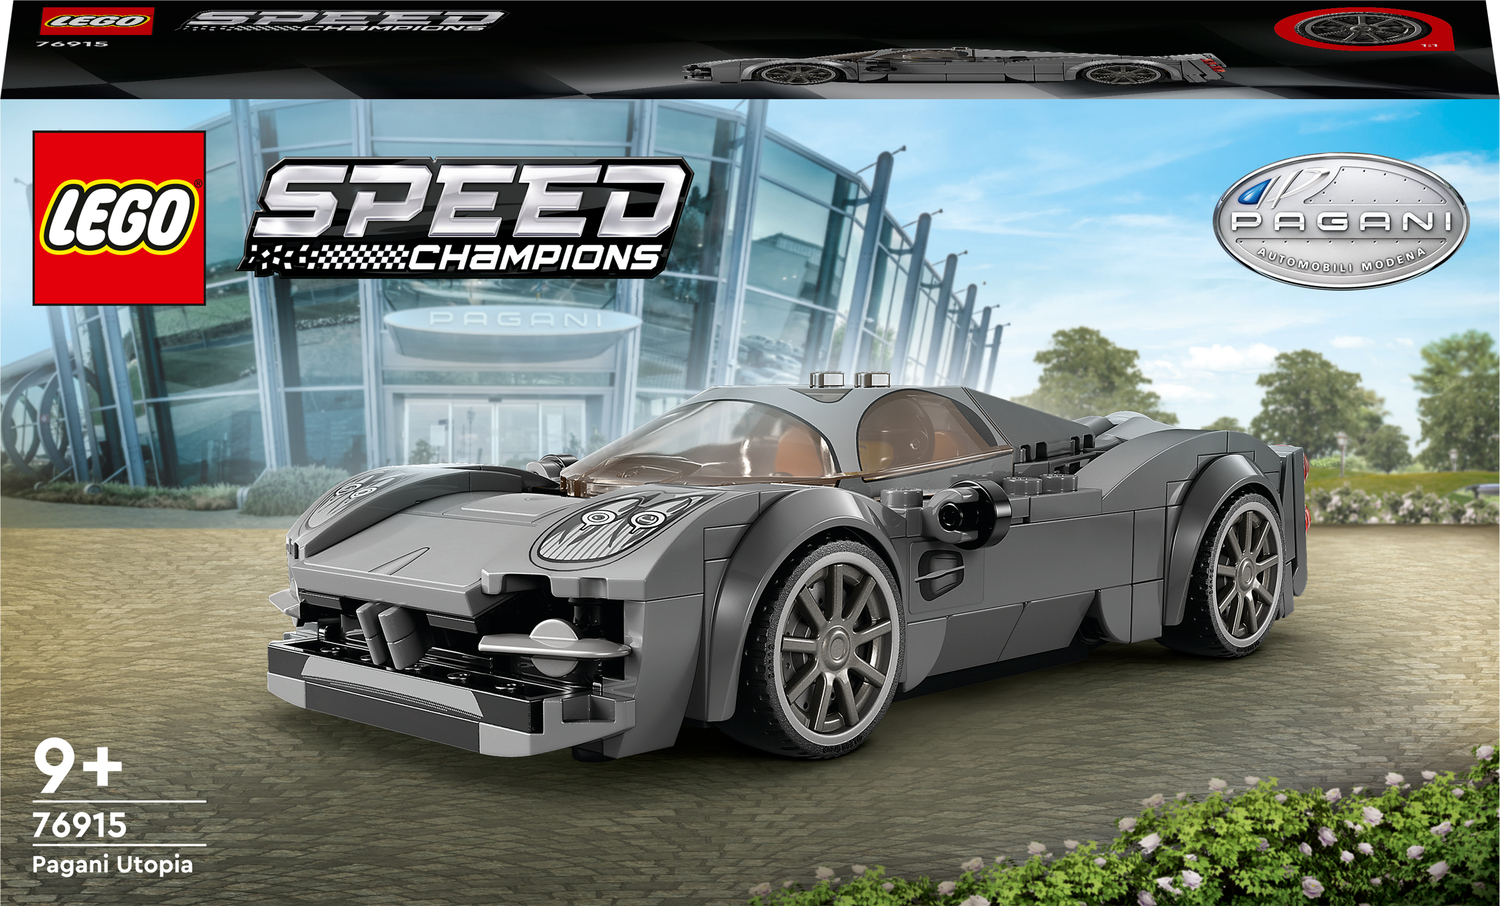 LEGO® Speed Champions Pagani Utopia - Imagine That Toys